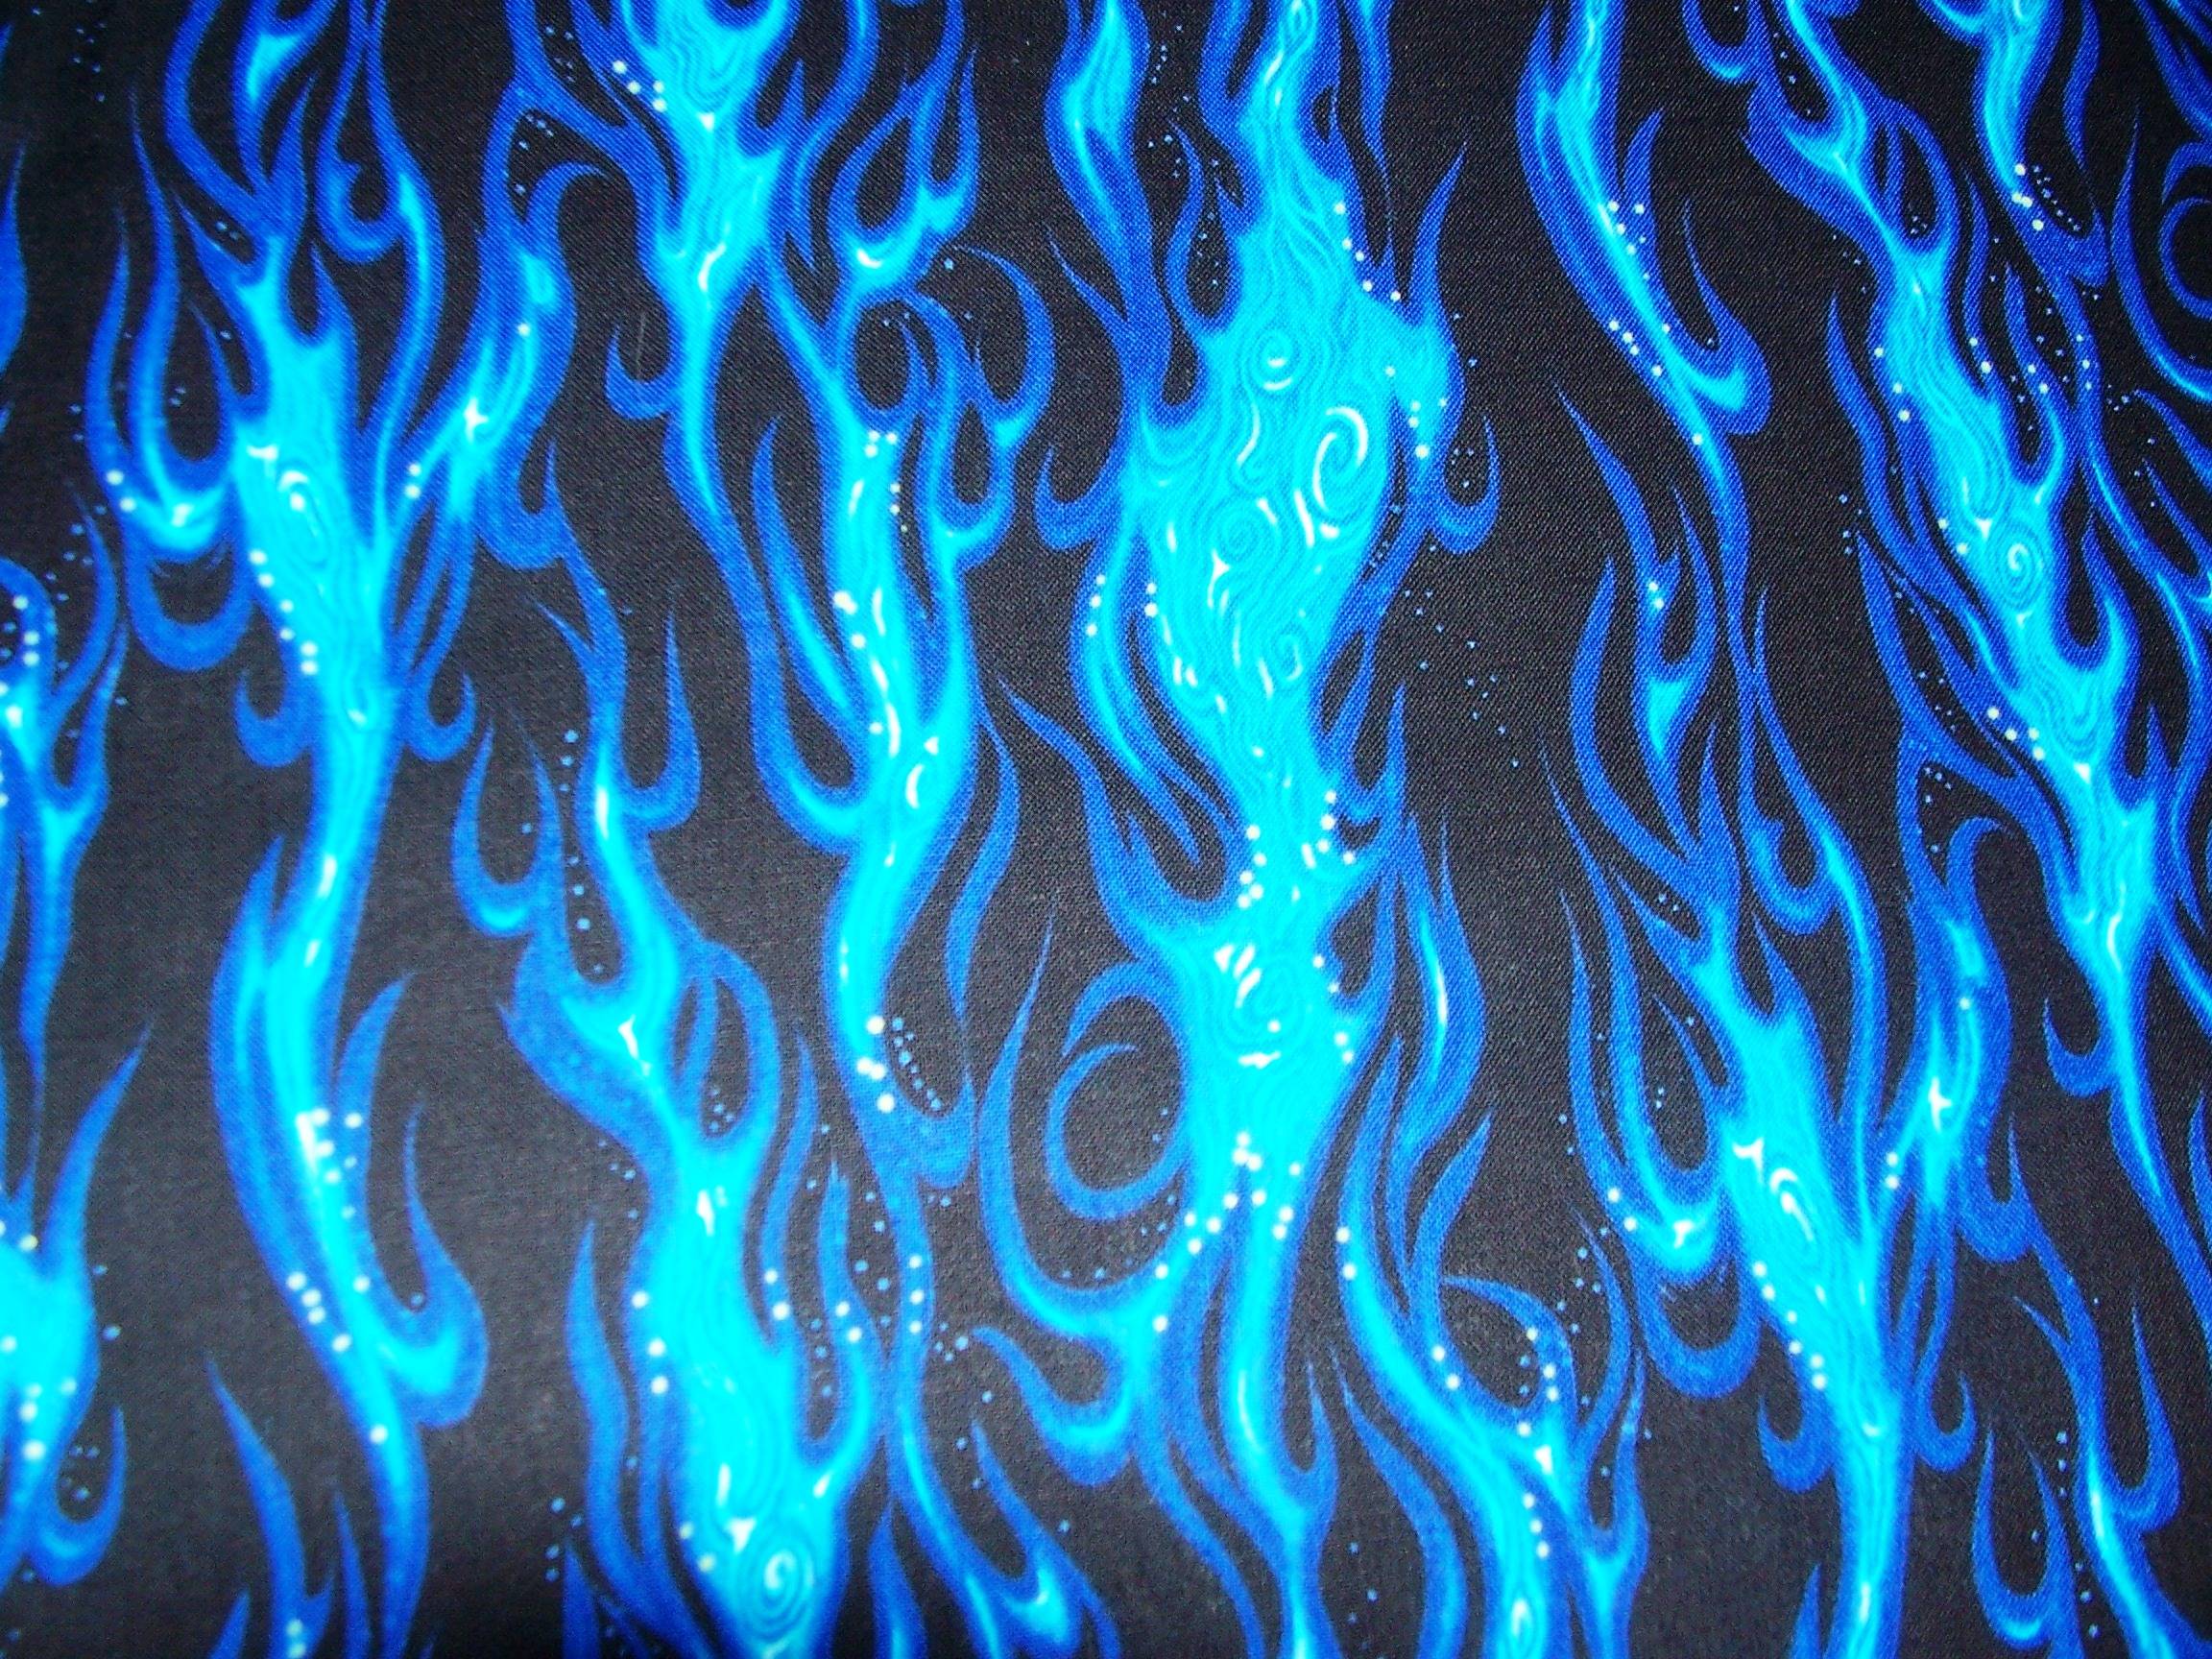 Neon Fire Wallpapers